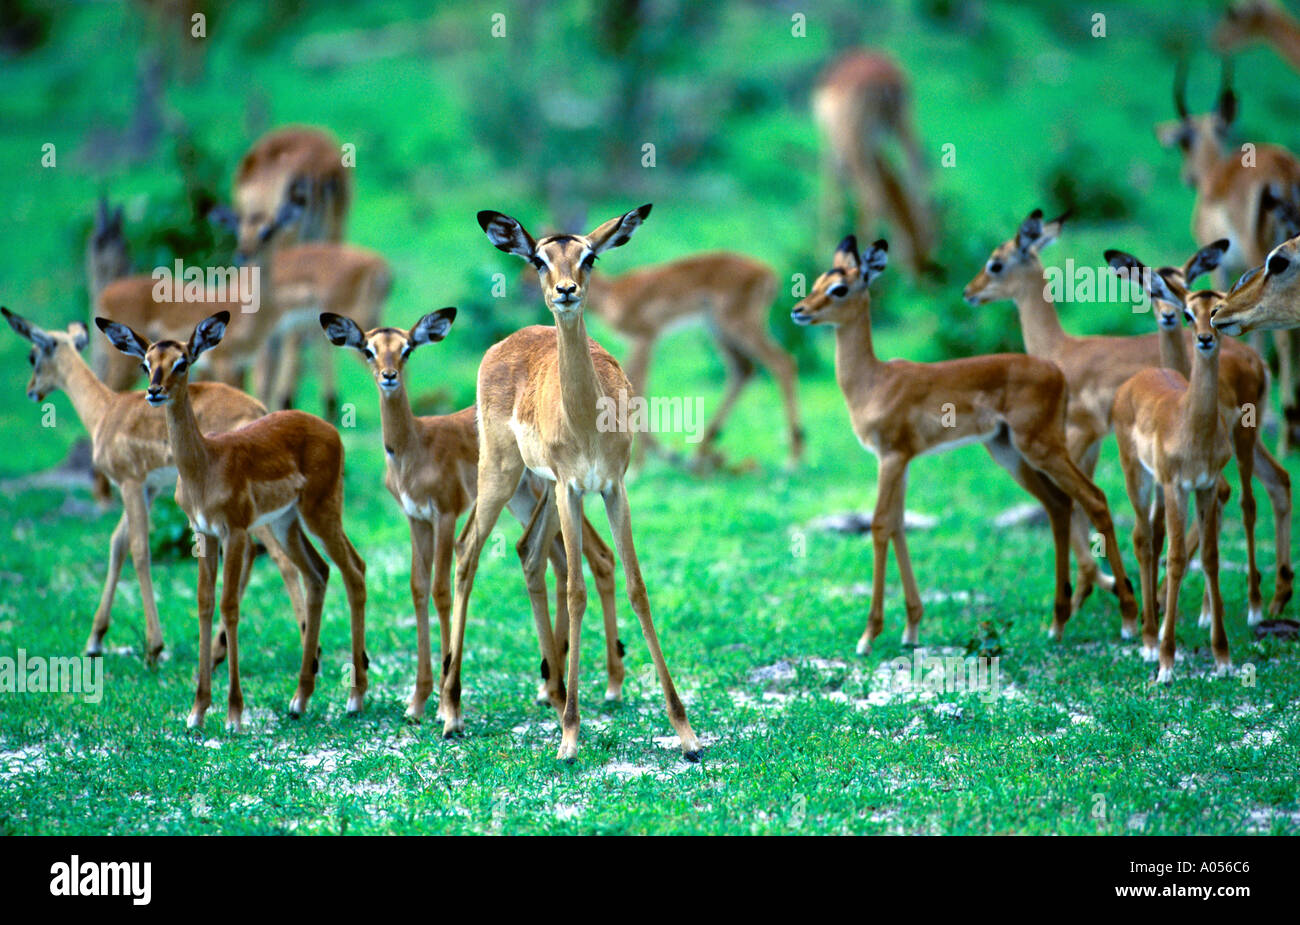 hind deer green trees bambi Stock Photo